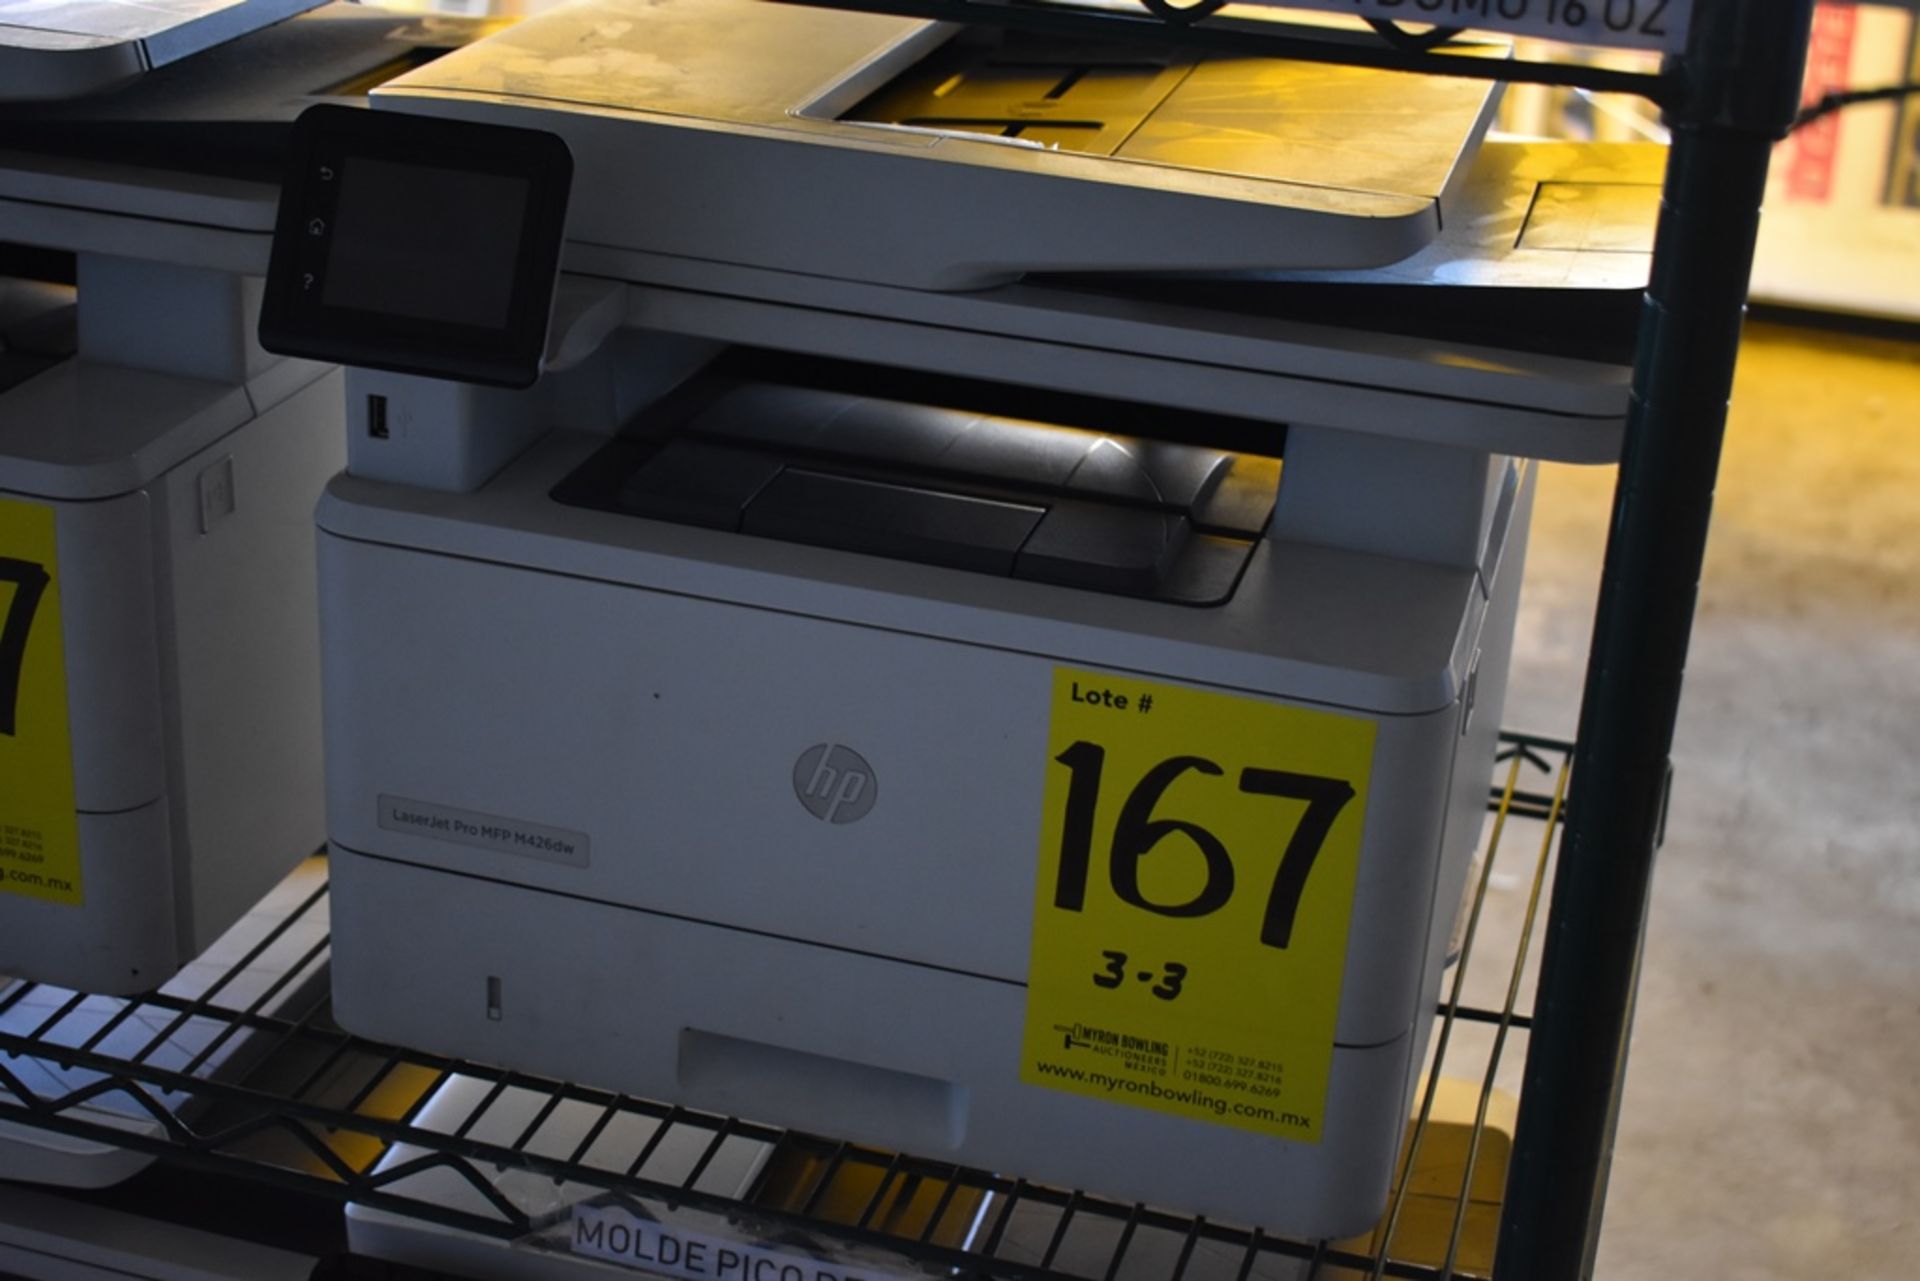 3 impresoras multifuncional marca HP, Modelo: LaserJet Pro MFP M426fdw - Image 21 of 21